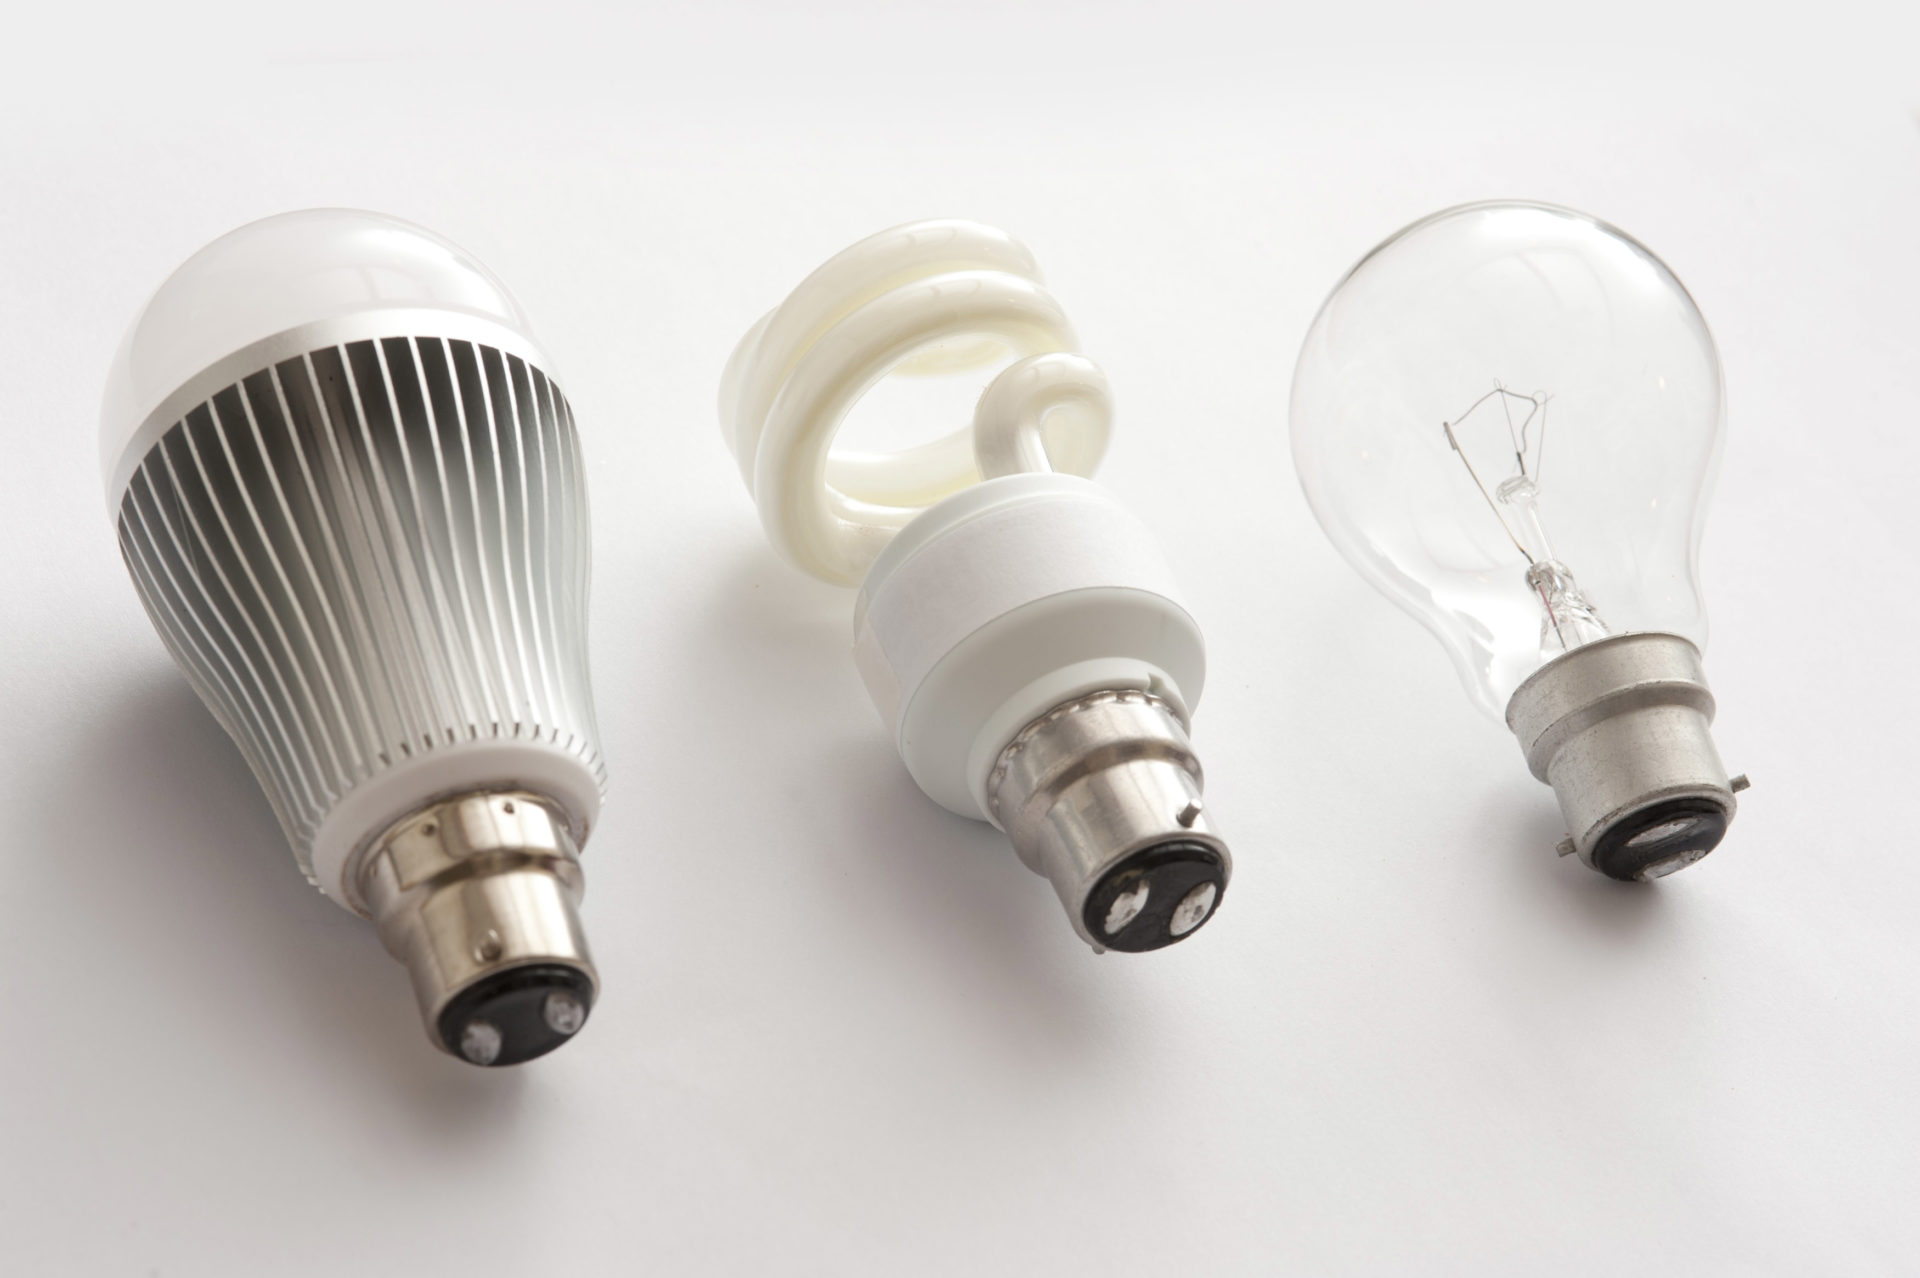 Three generations of light bulbs